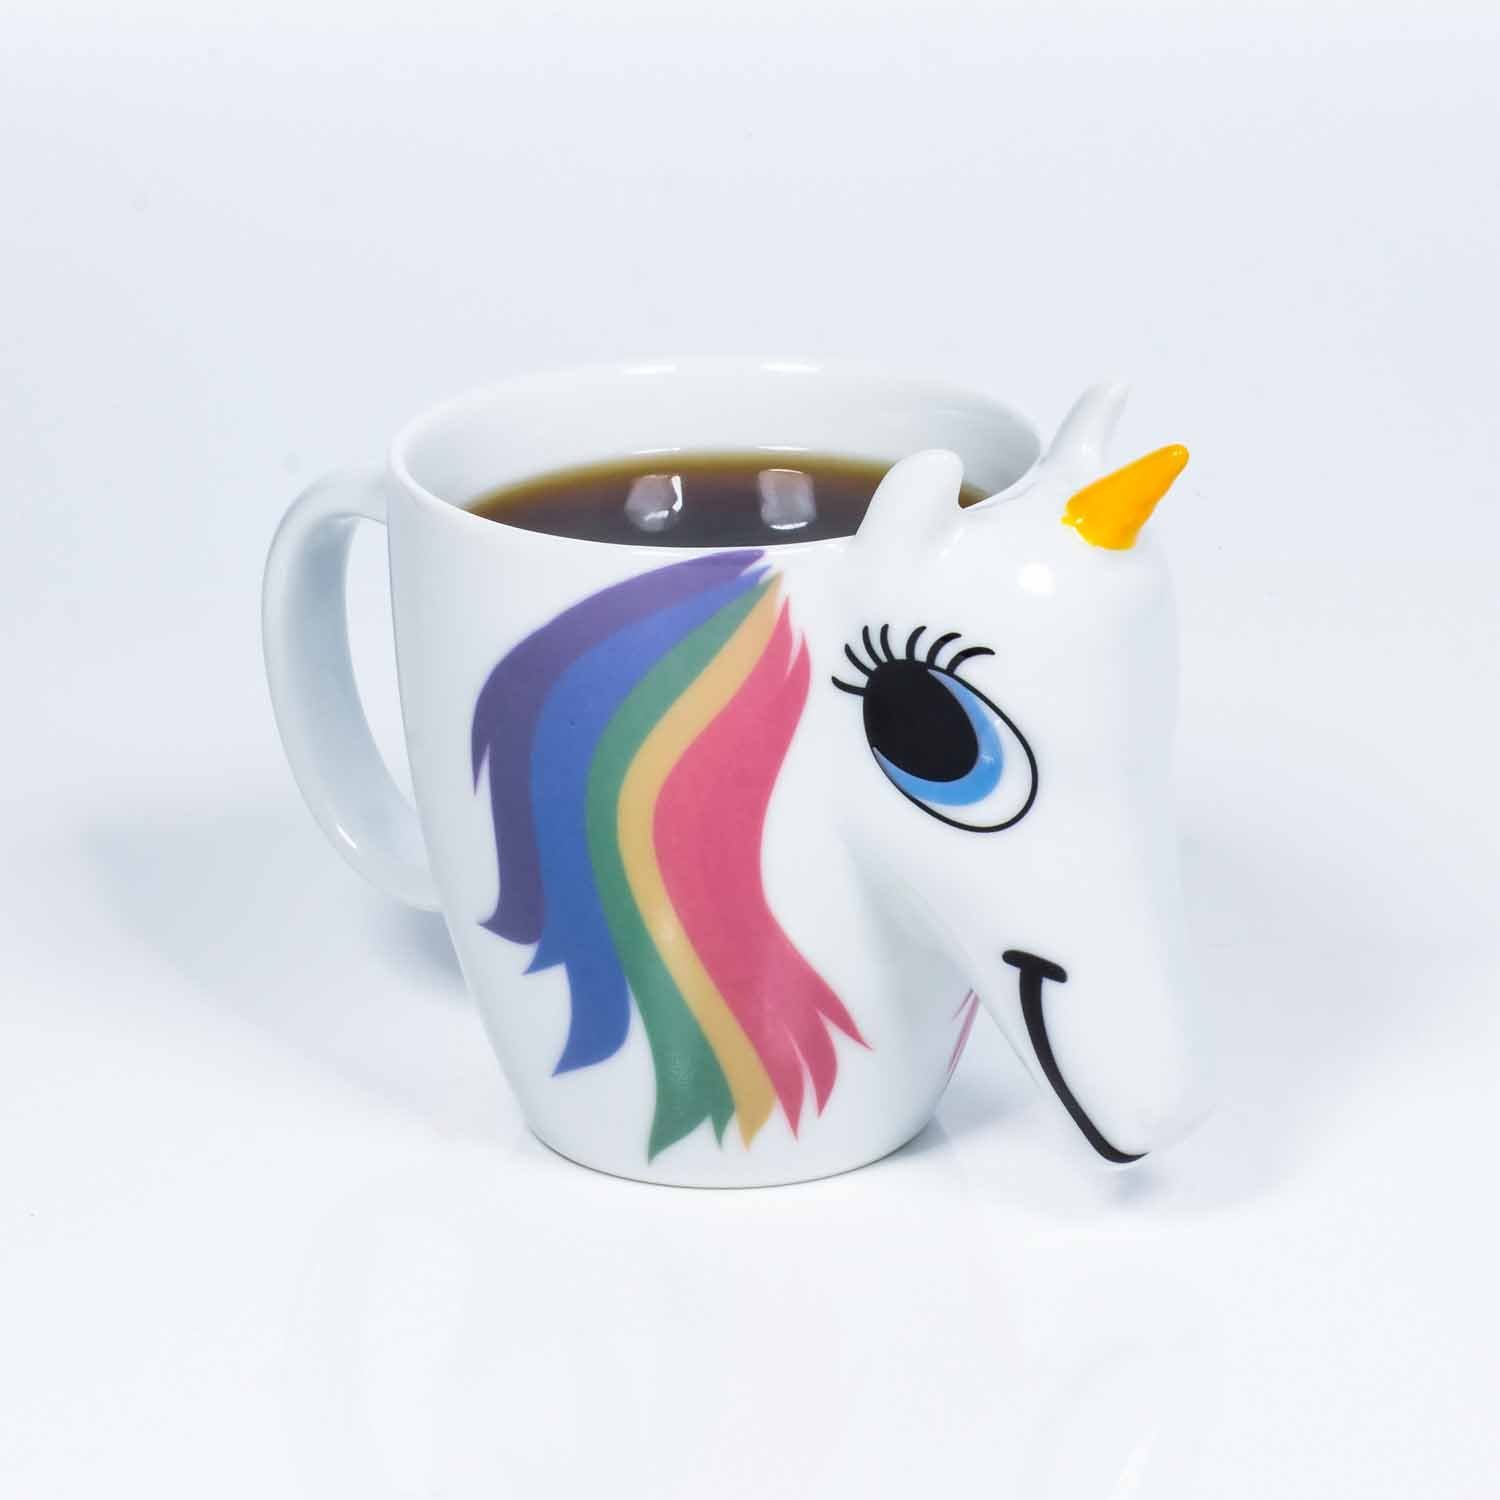 "Unicorn Up - Tasse Einhorn Mug" Farbwechseleffekt Tasse mit Thumbs Tasse Farbwechsel, Keramik,